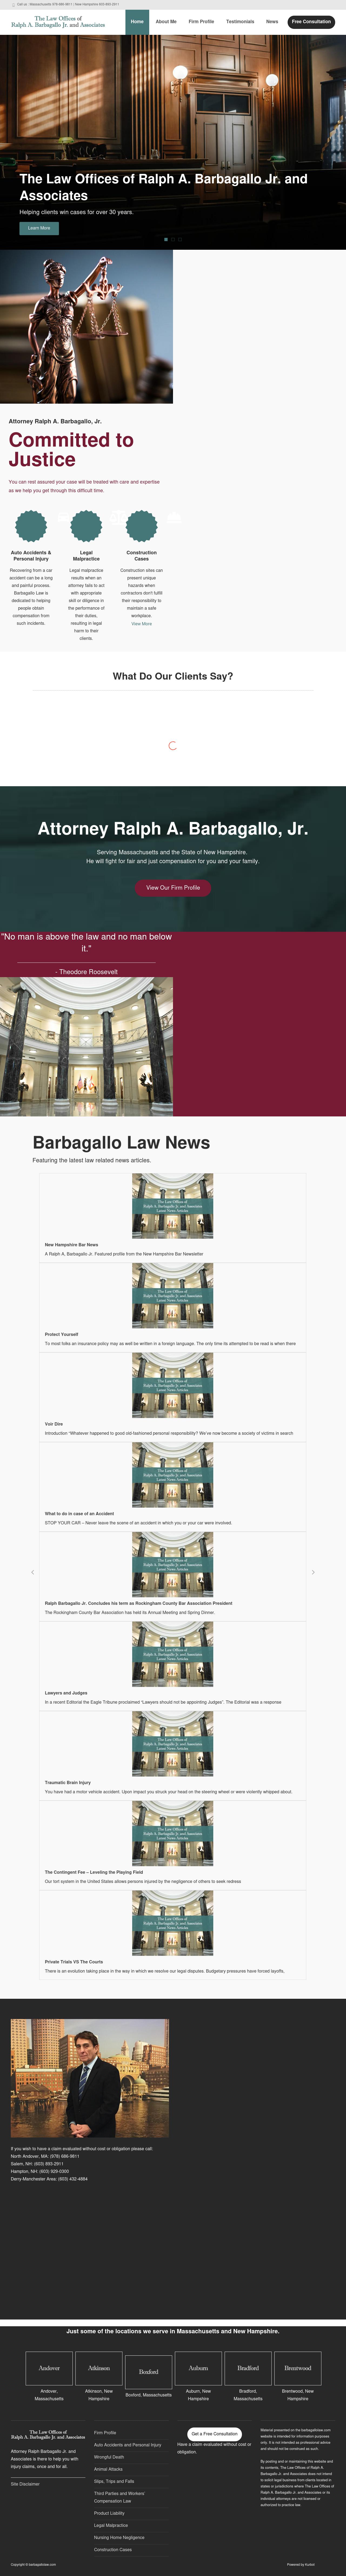 Ralph A. Barbagallo Jr. & Associates - North Andover MA Lawyers